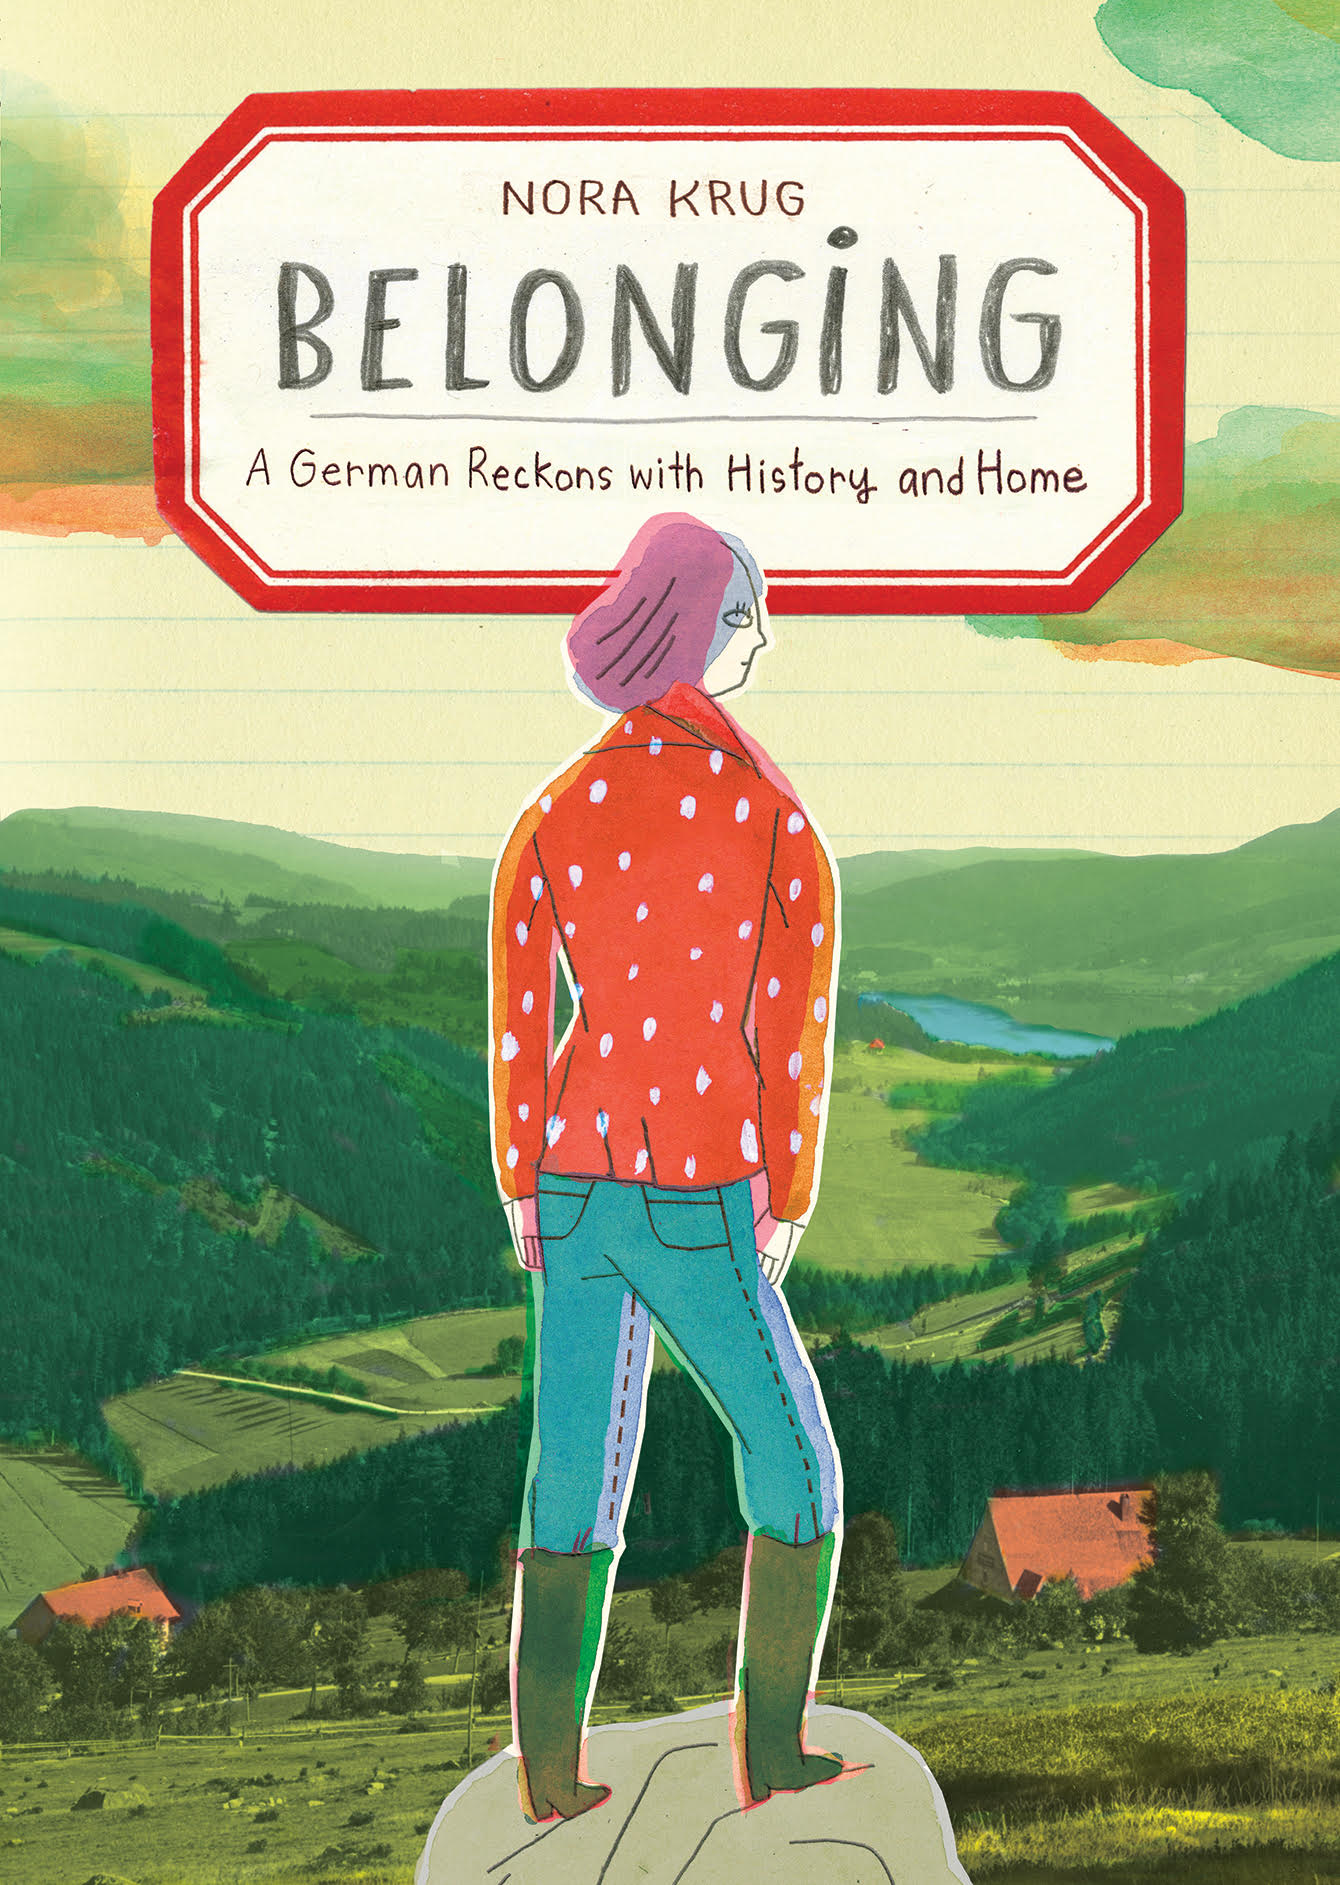 Book title of Nora Krug's "Belonging"